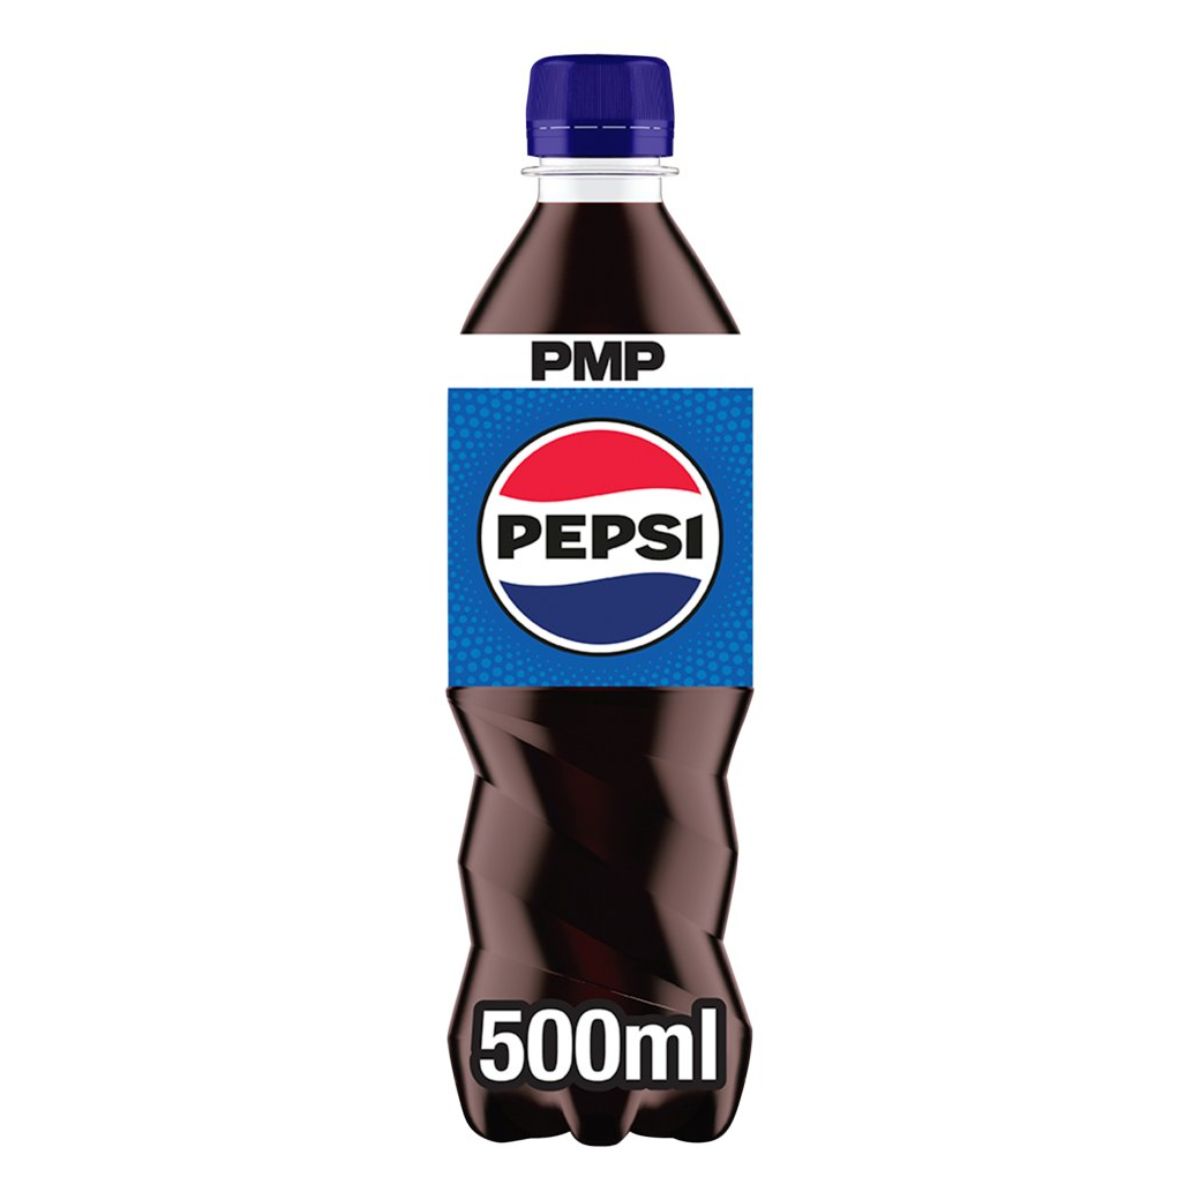 A plastic bottle of Pepsi - Original - 500ml soda.